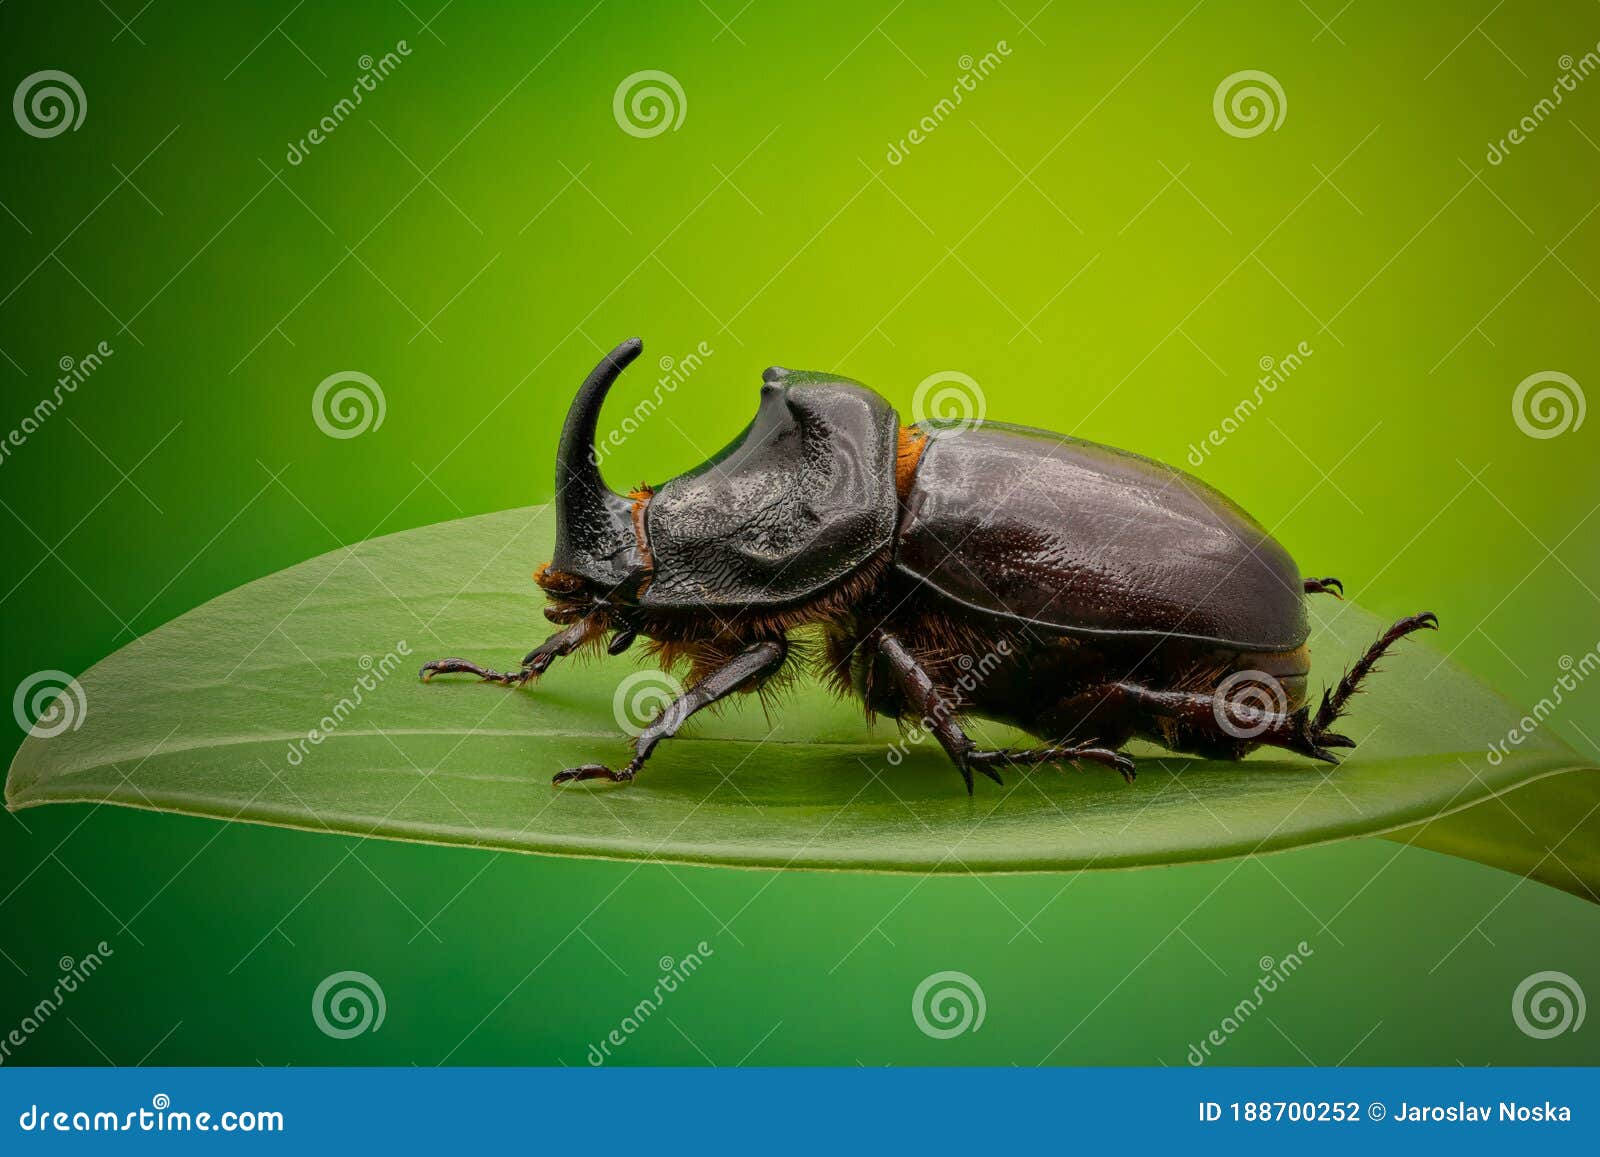 rhinoceros beetle close up